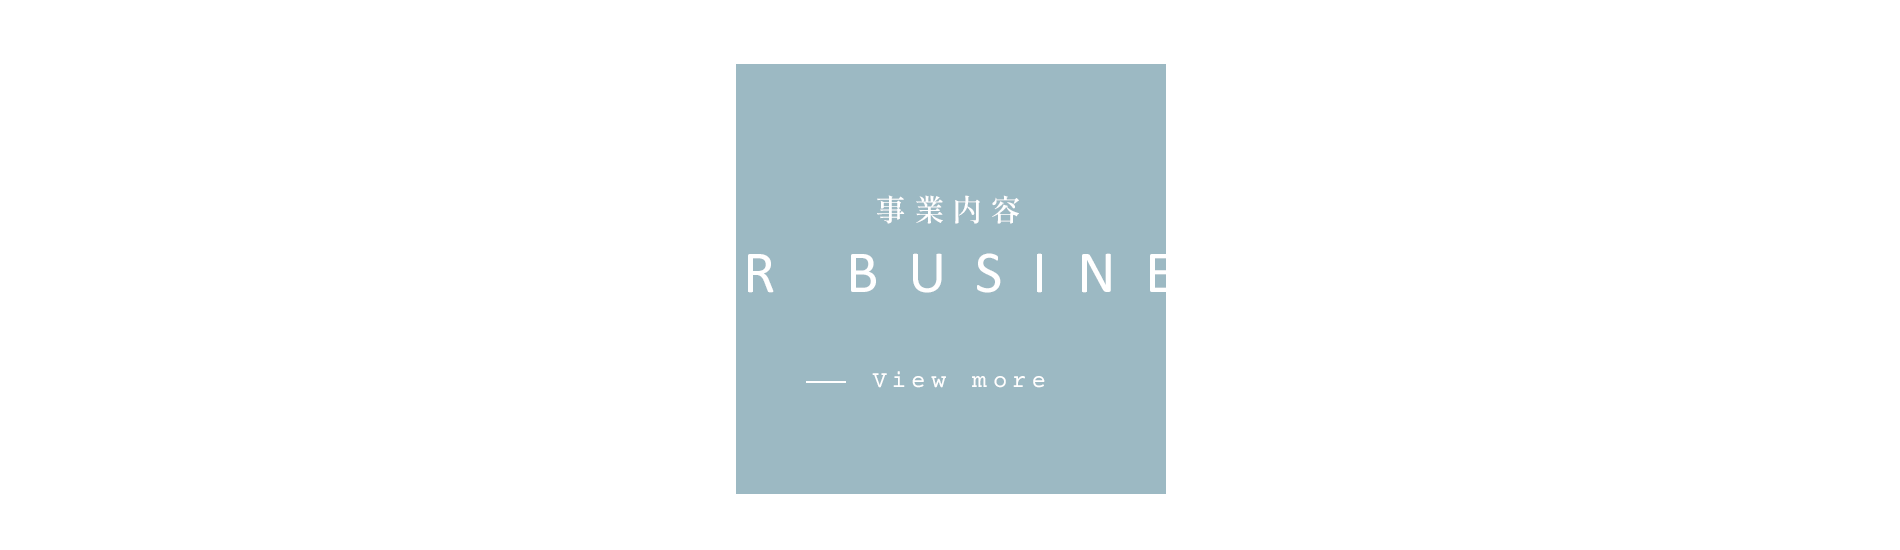 banner_business_txt